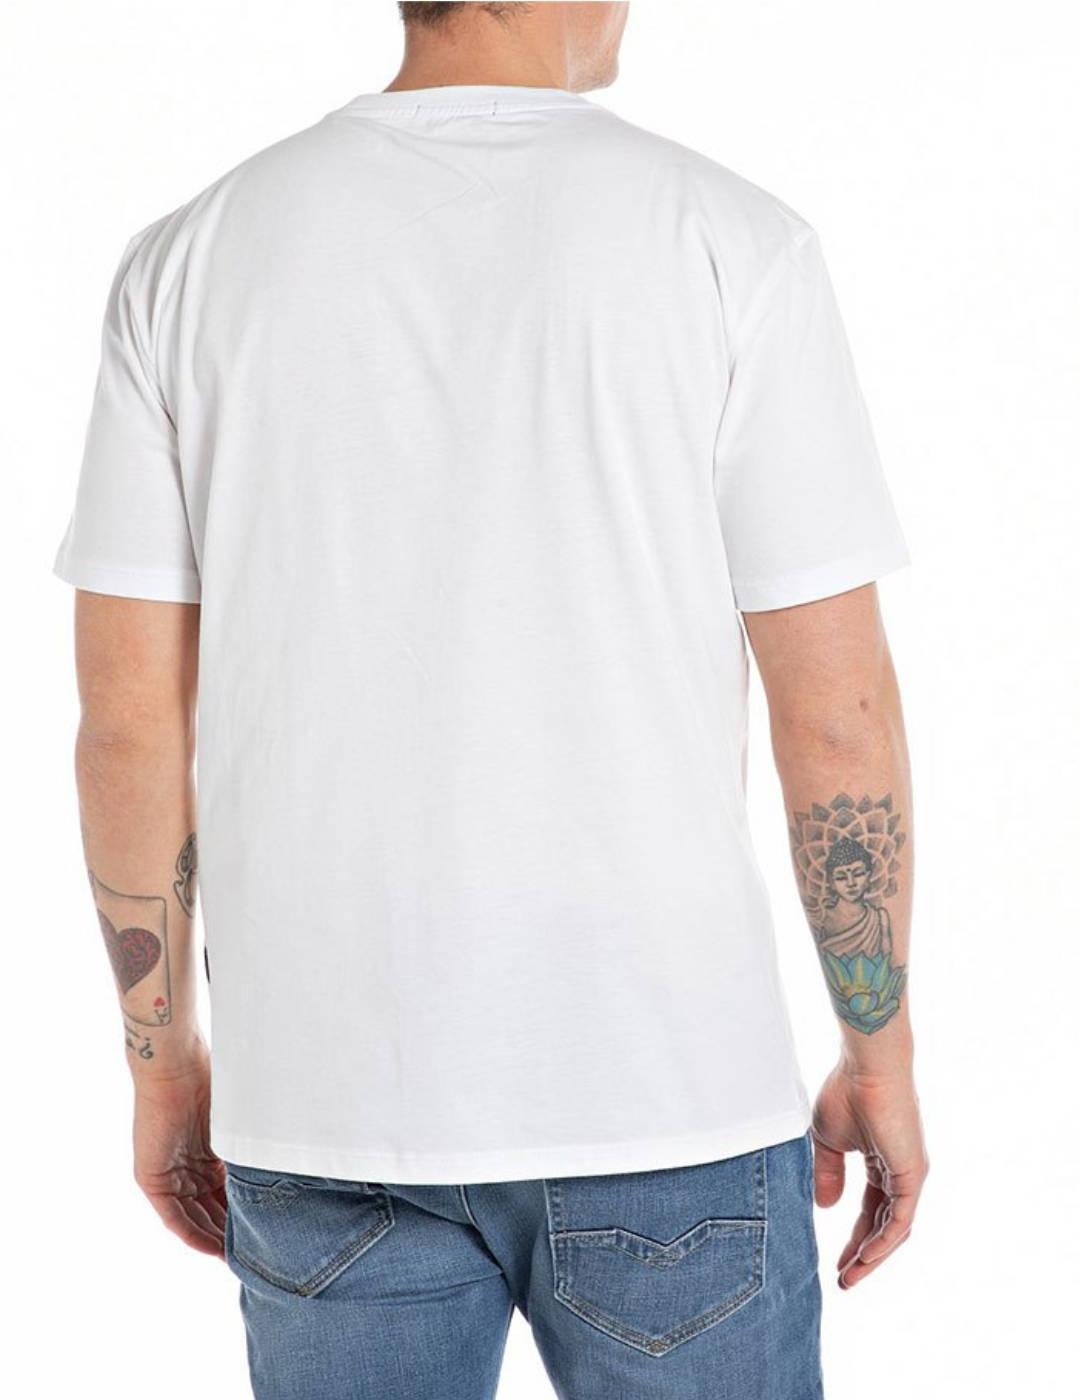 Camiseta Replay blanca logo rectangular manga corta hombre